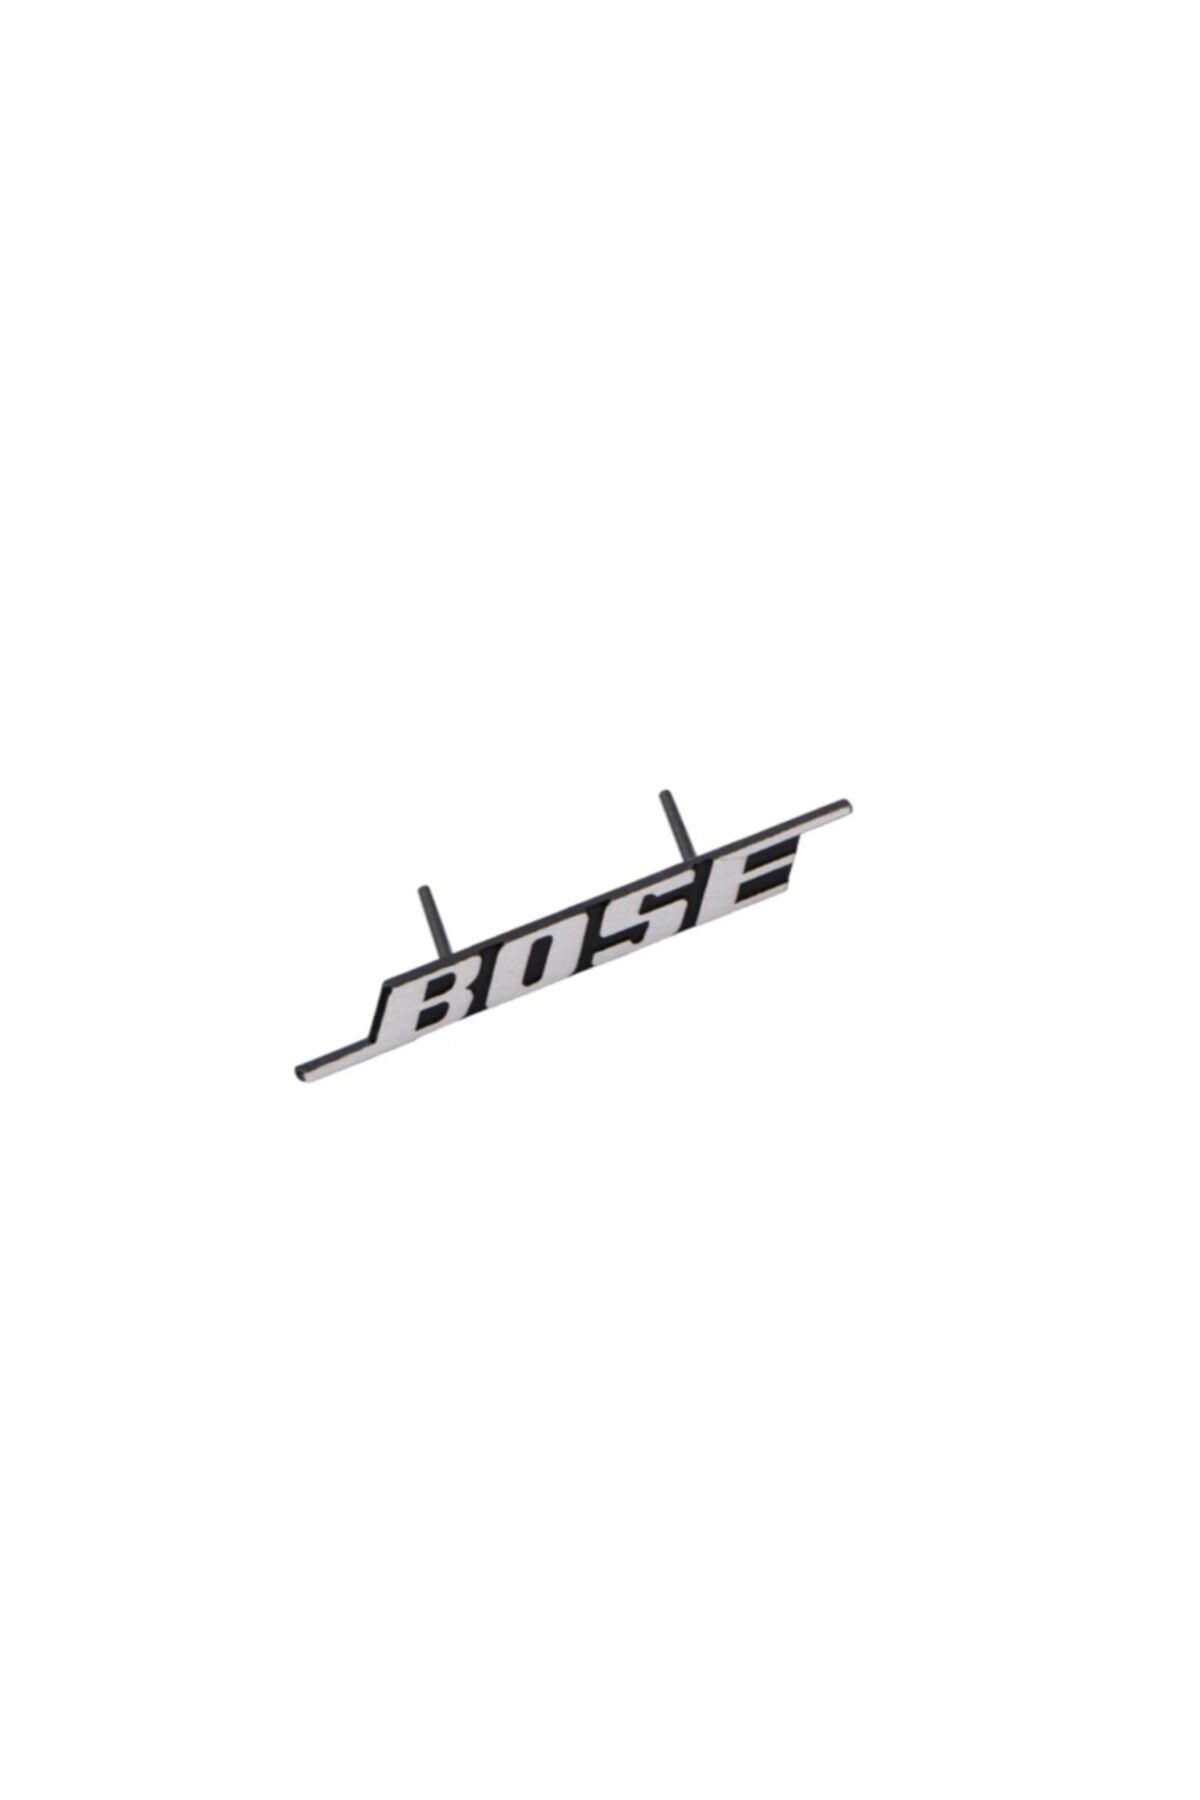 Mercedes Bose Hoparlor Yapıştırma /logo/sticker Set 4cm (2 ADET) Bose_